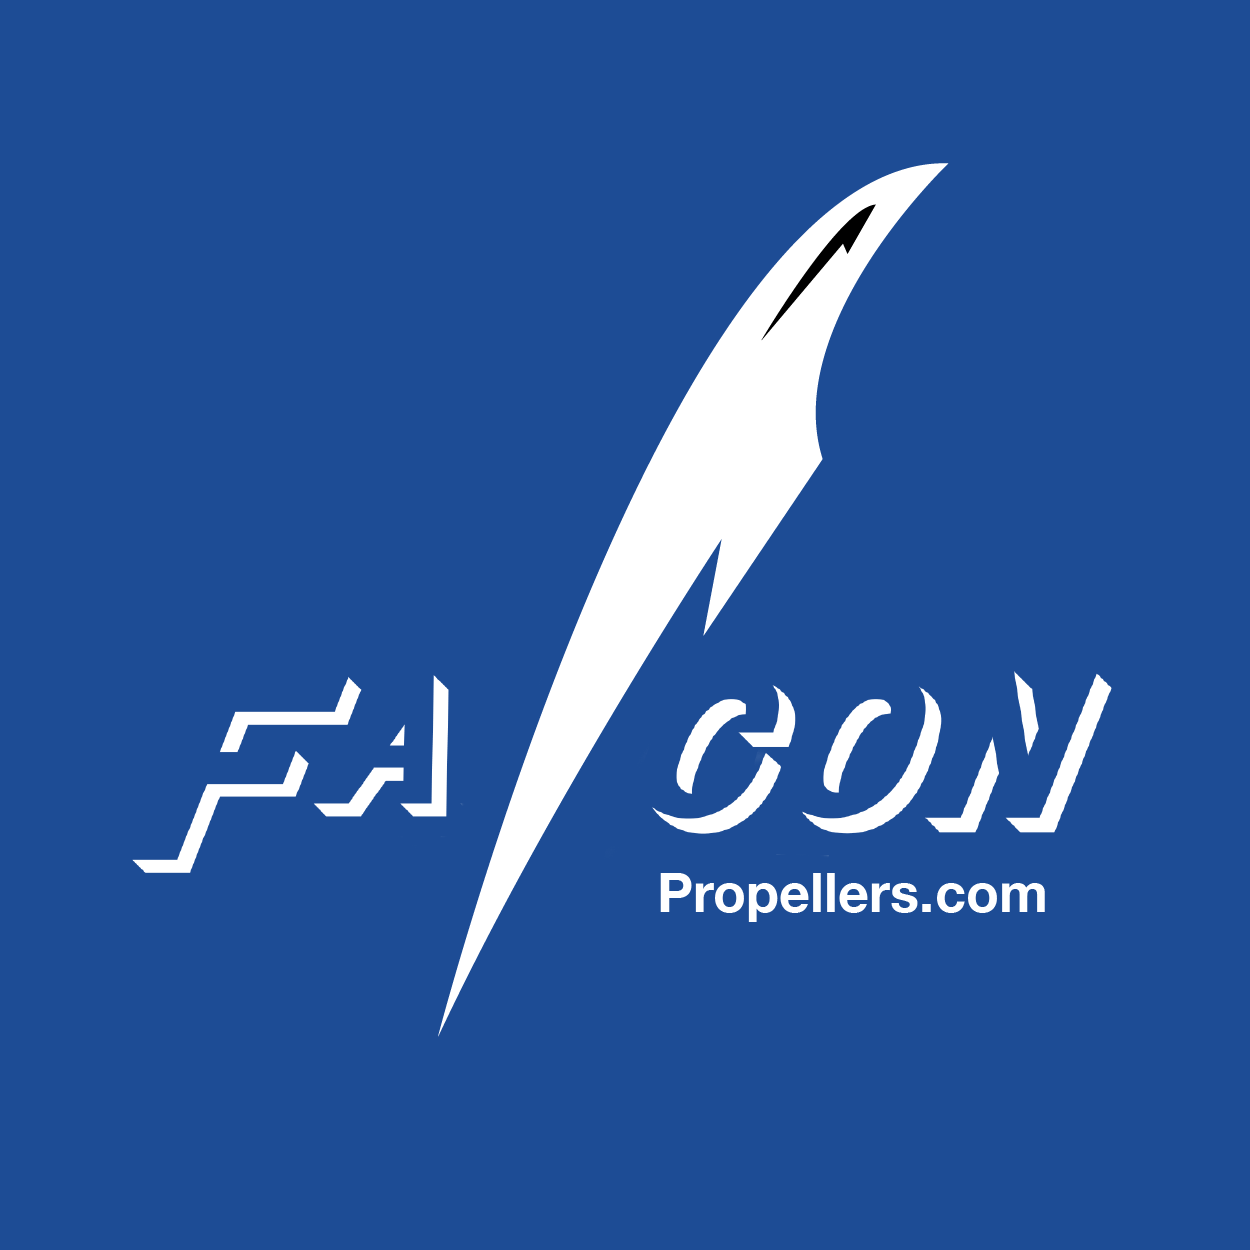 www.falconpropellers.com